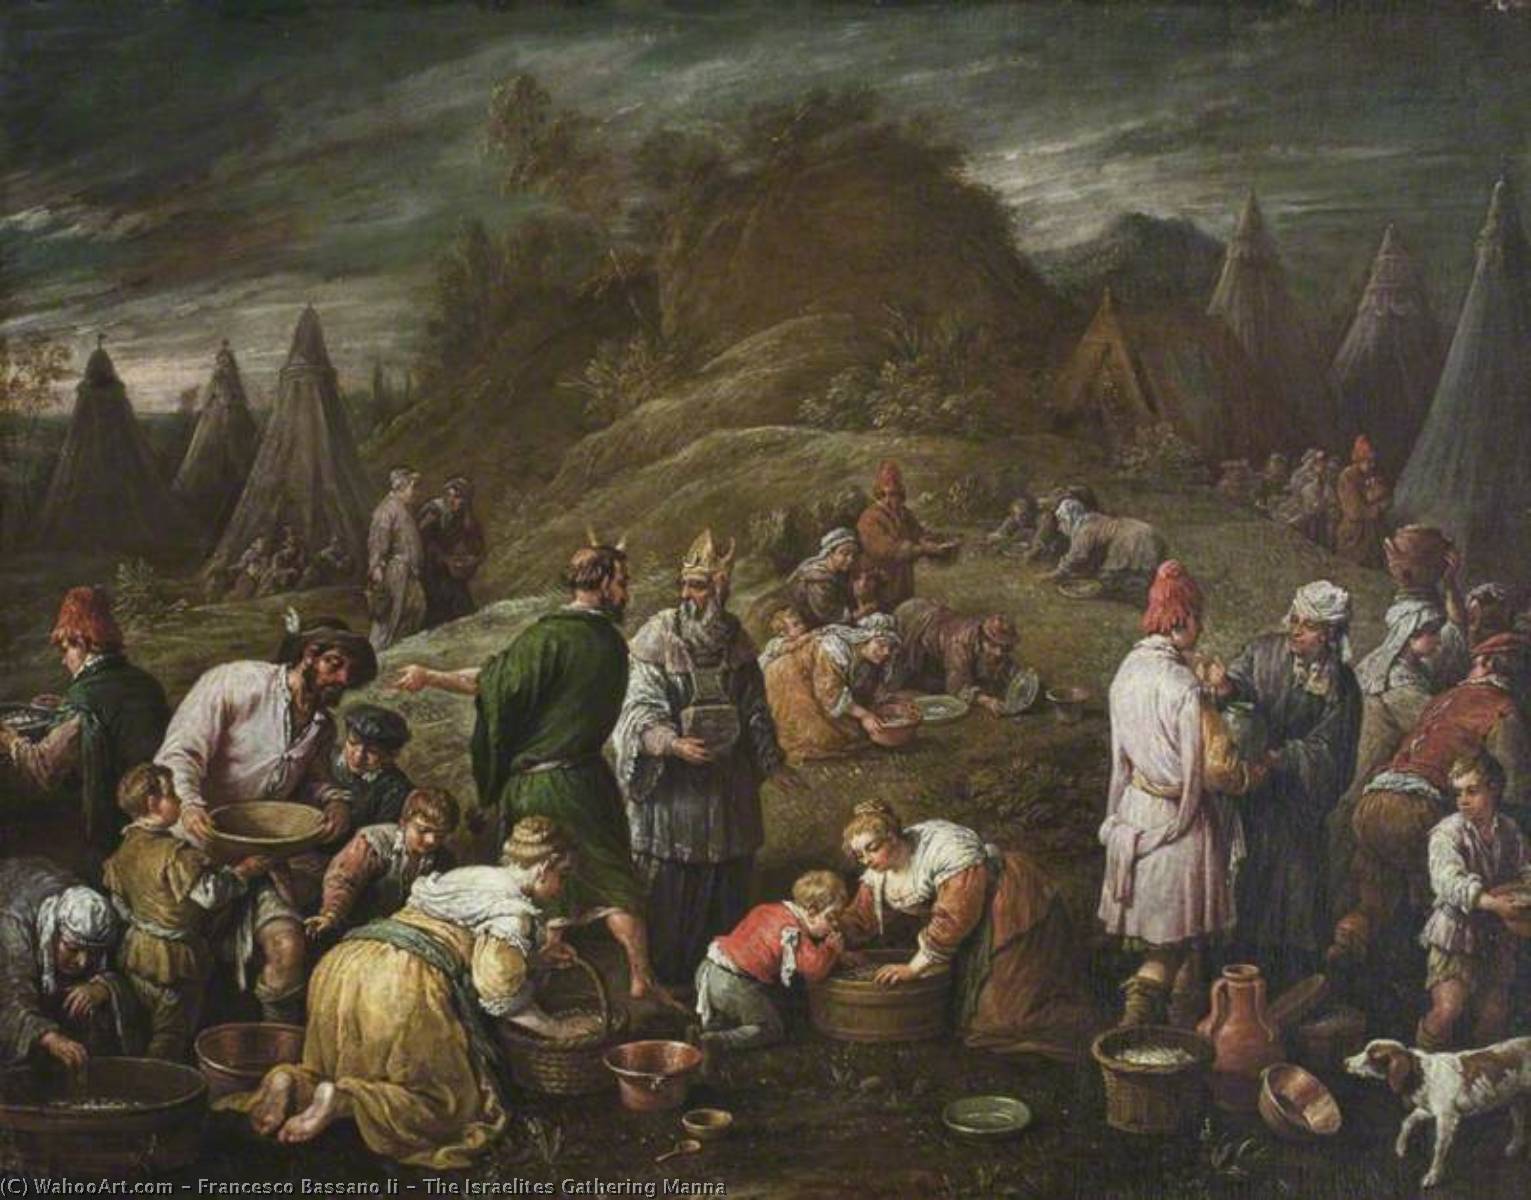 The Israelites Gathering Manna, 1590 by Francesco Bassano Ii Francesco Bassano Ii | ArtsDot.com